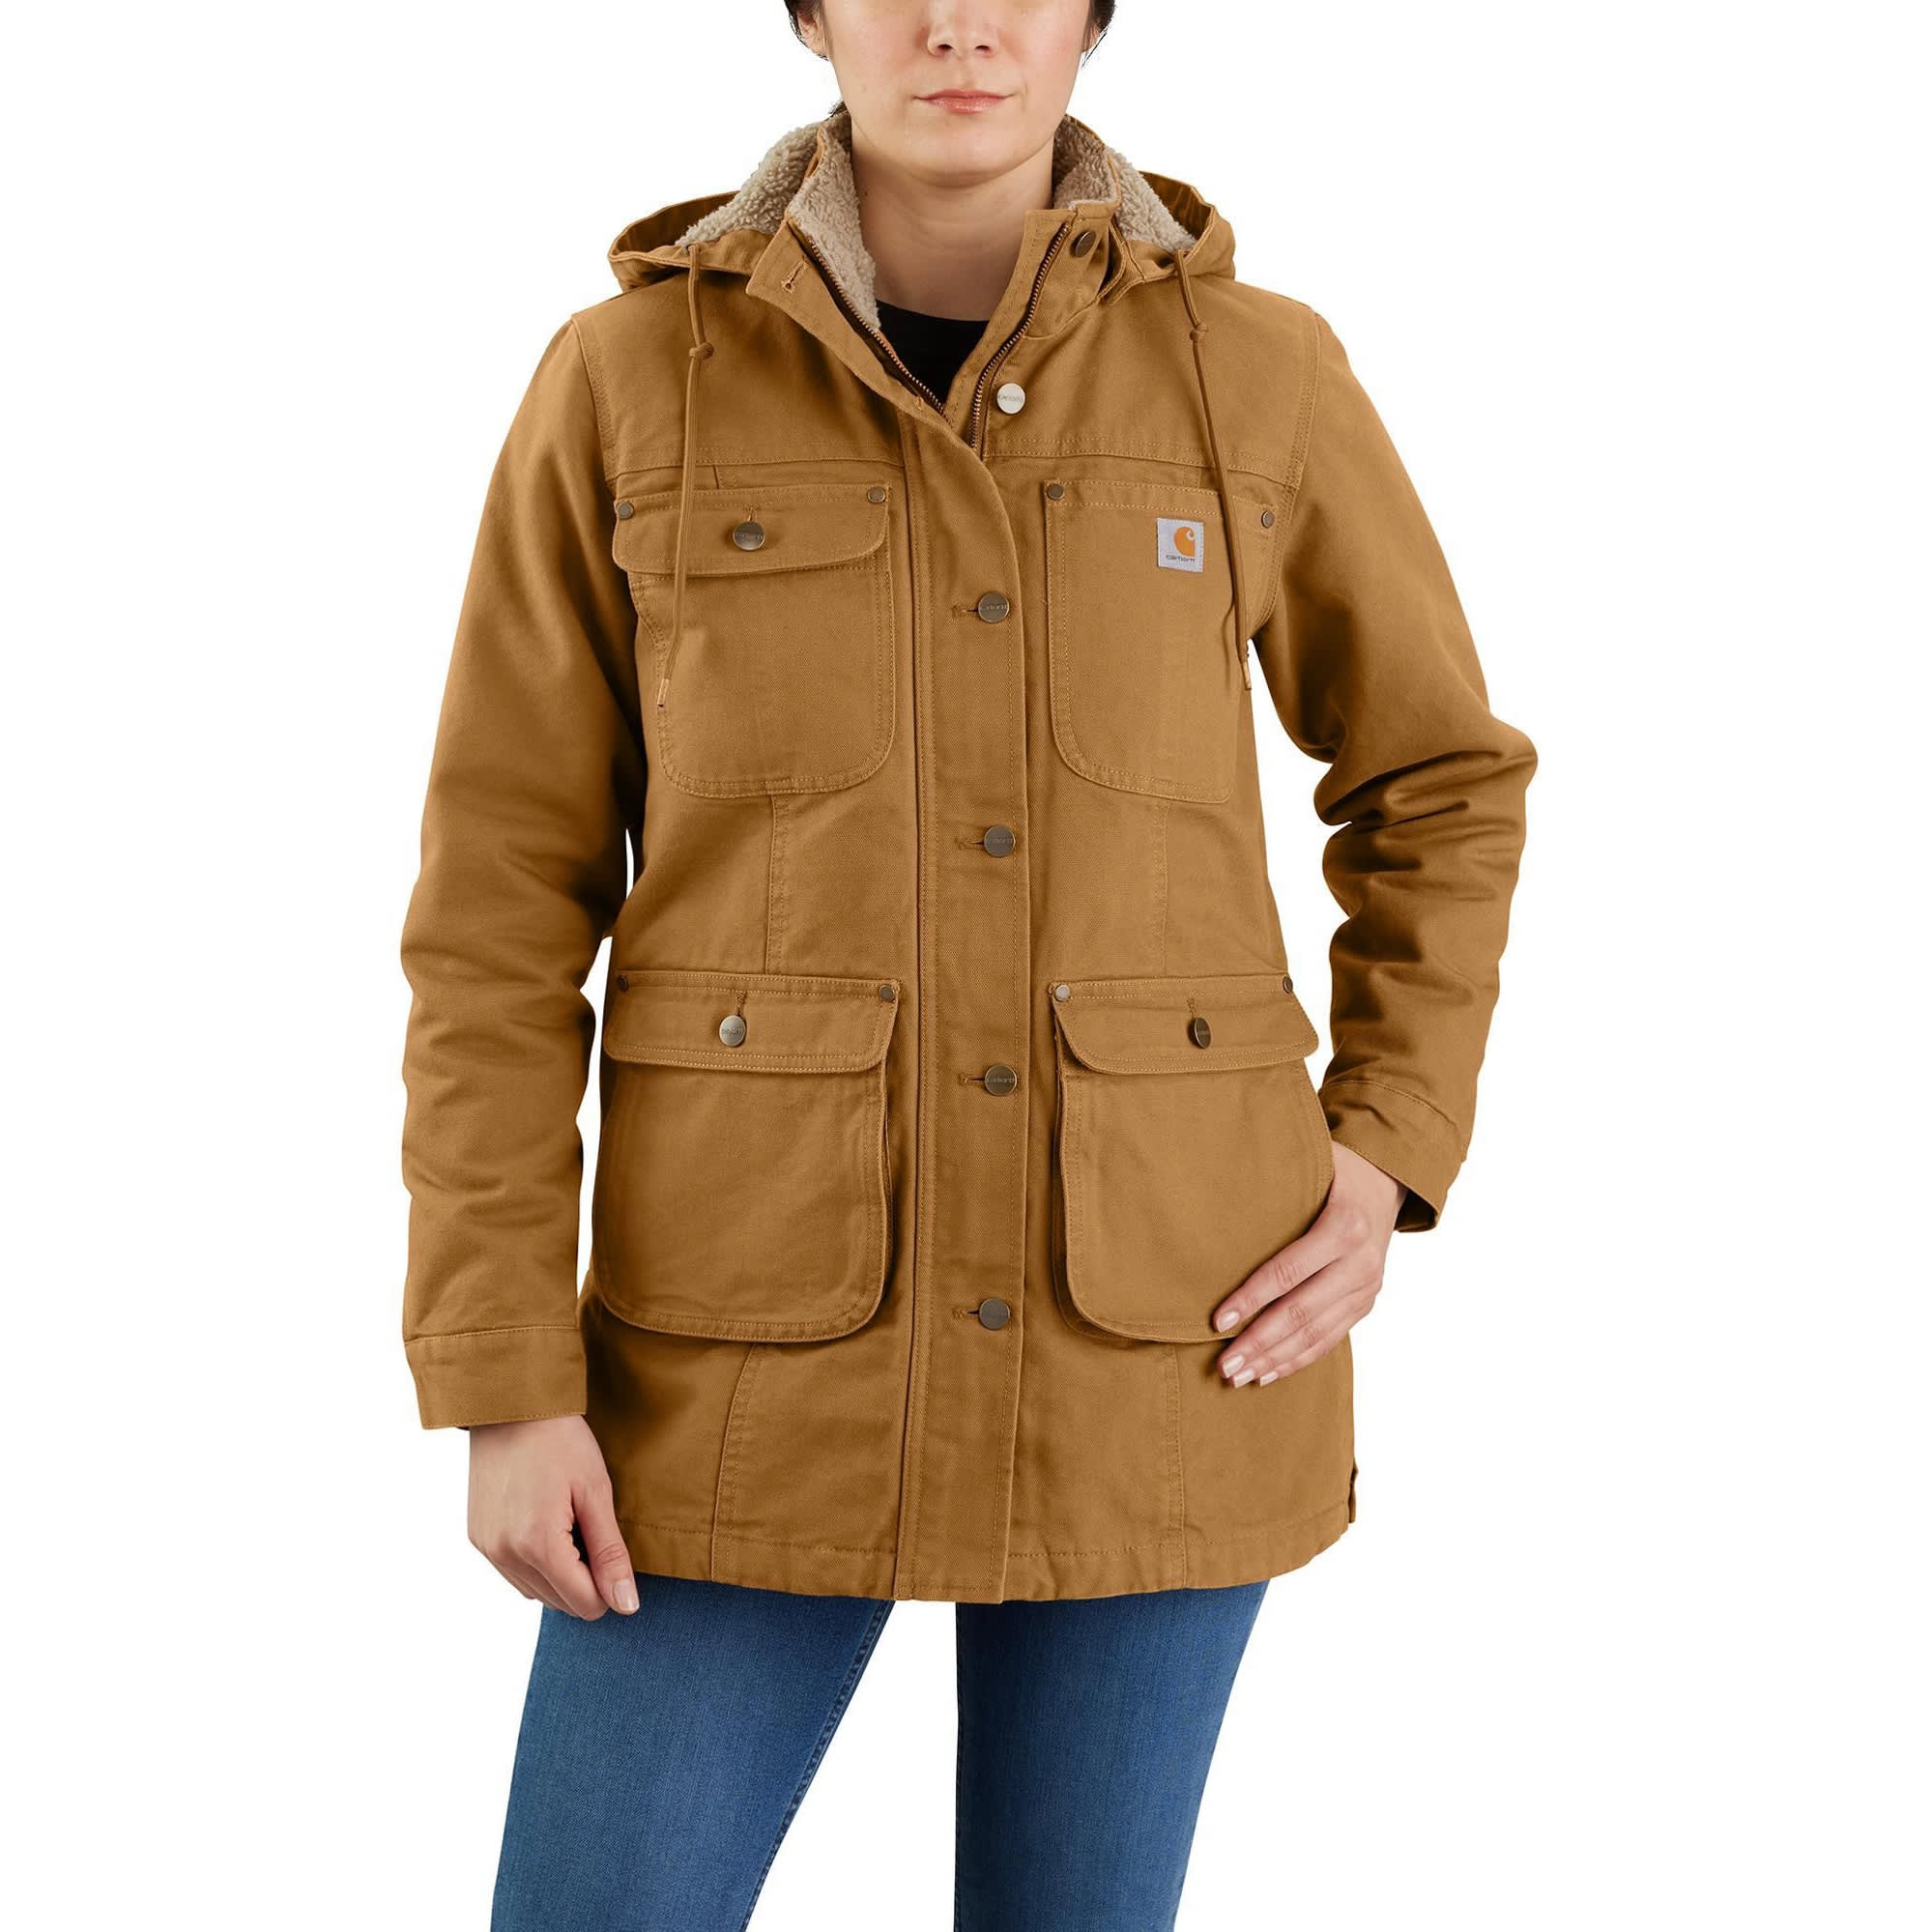 Columbia® Women's Joy Peak™ Omni-Heat™ Infinity Insulated Mid Jacket